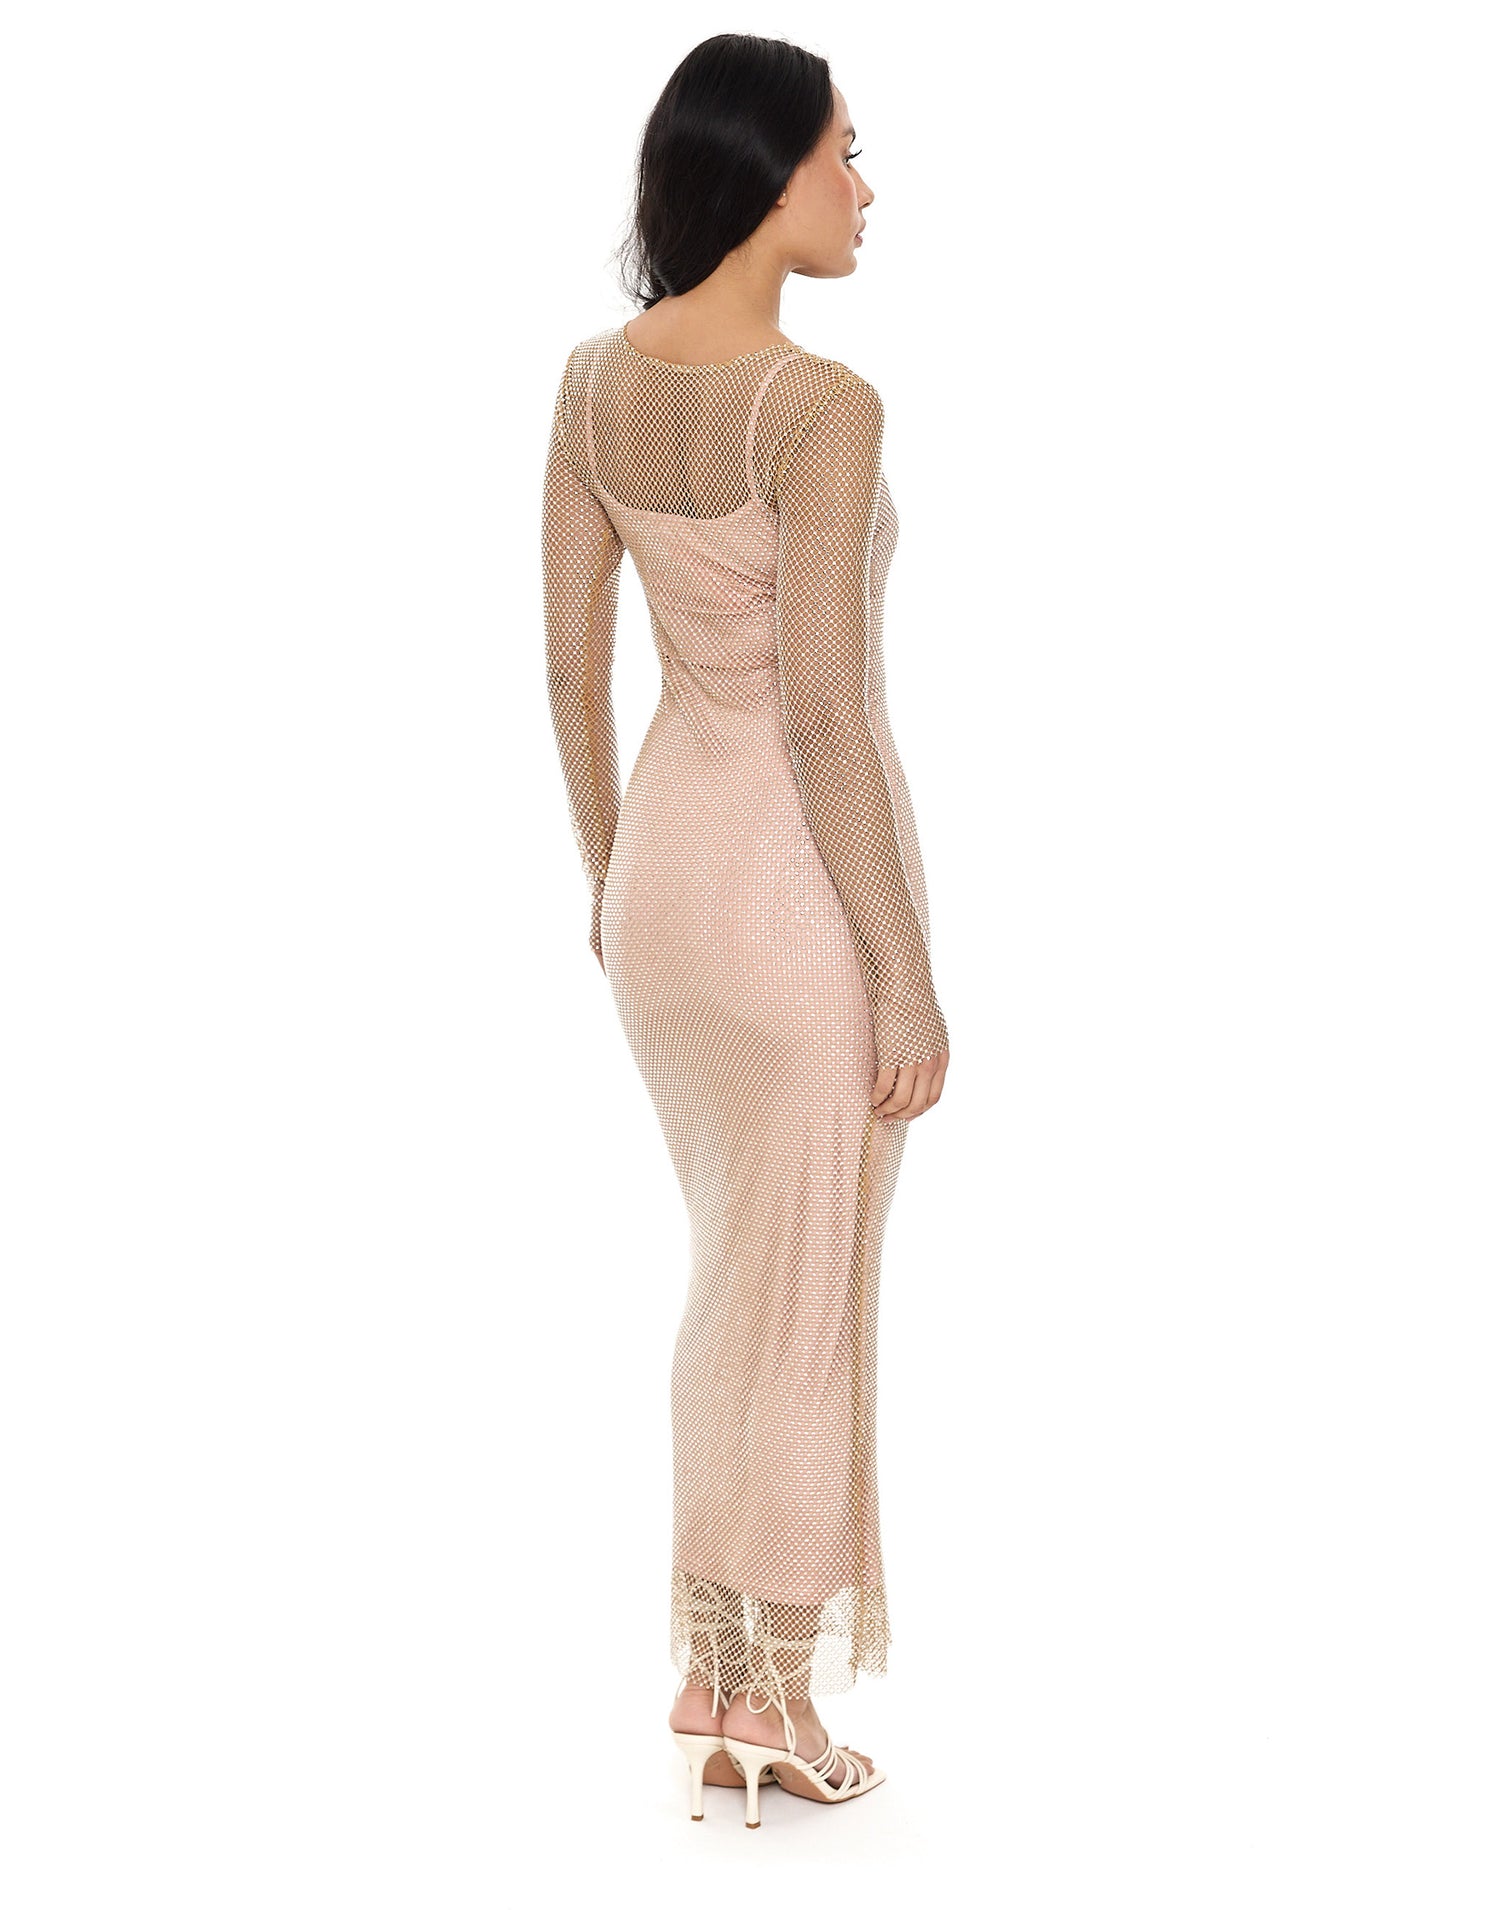 Diamante Long Sleeve Maxi Dress in Cream